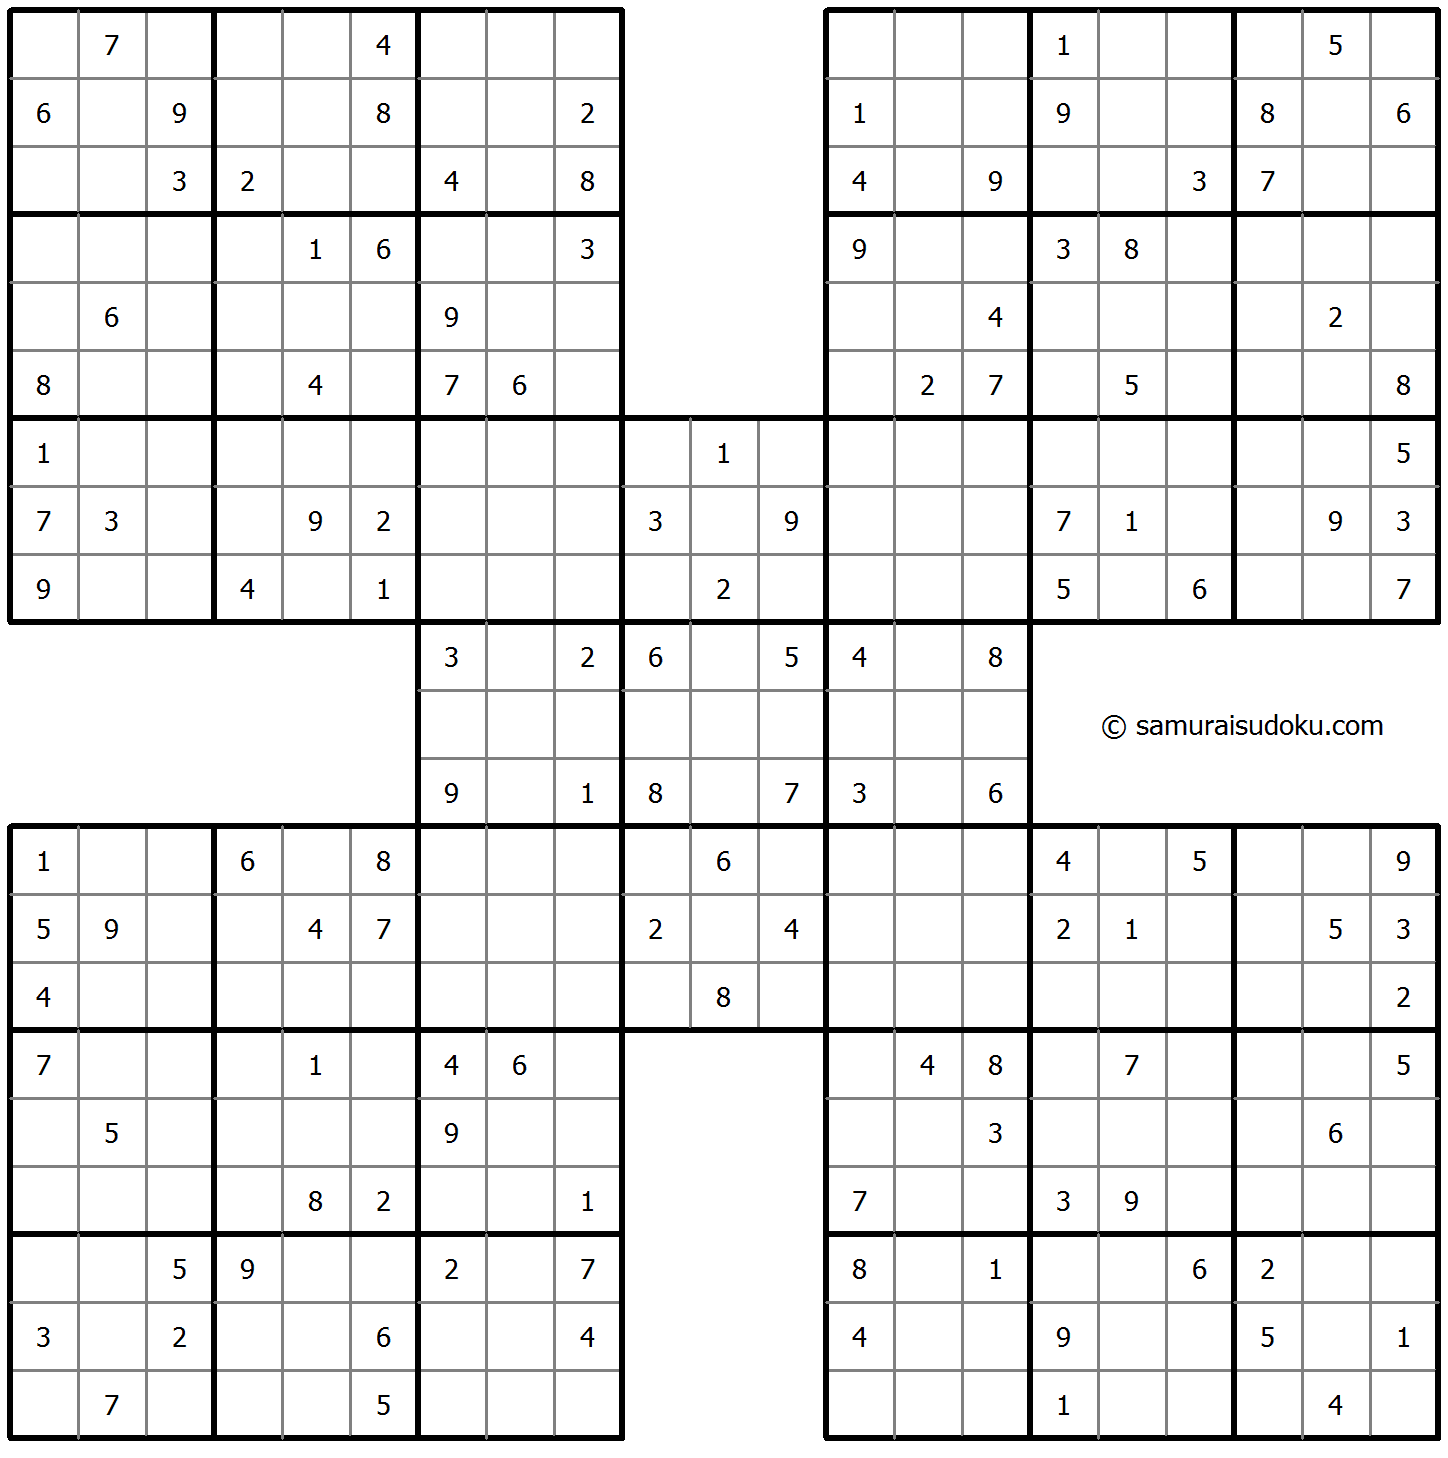 Samurai Sudoku 3-May-2021